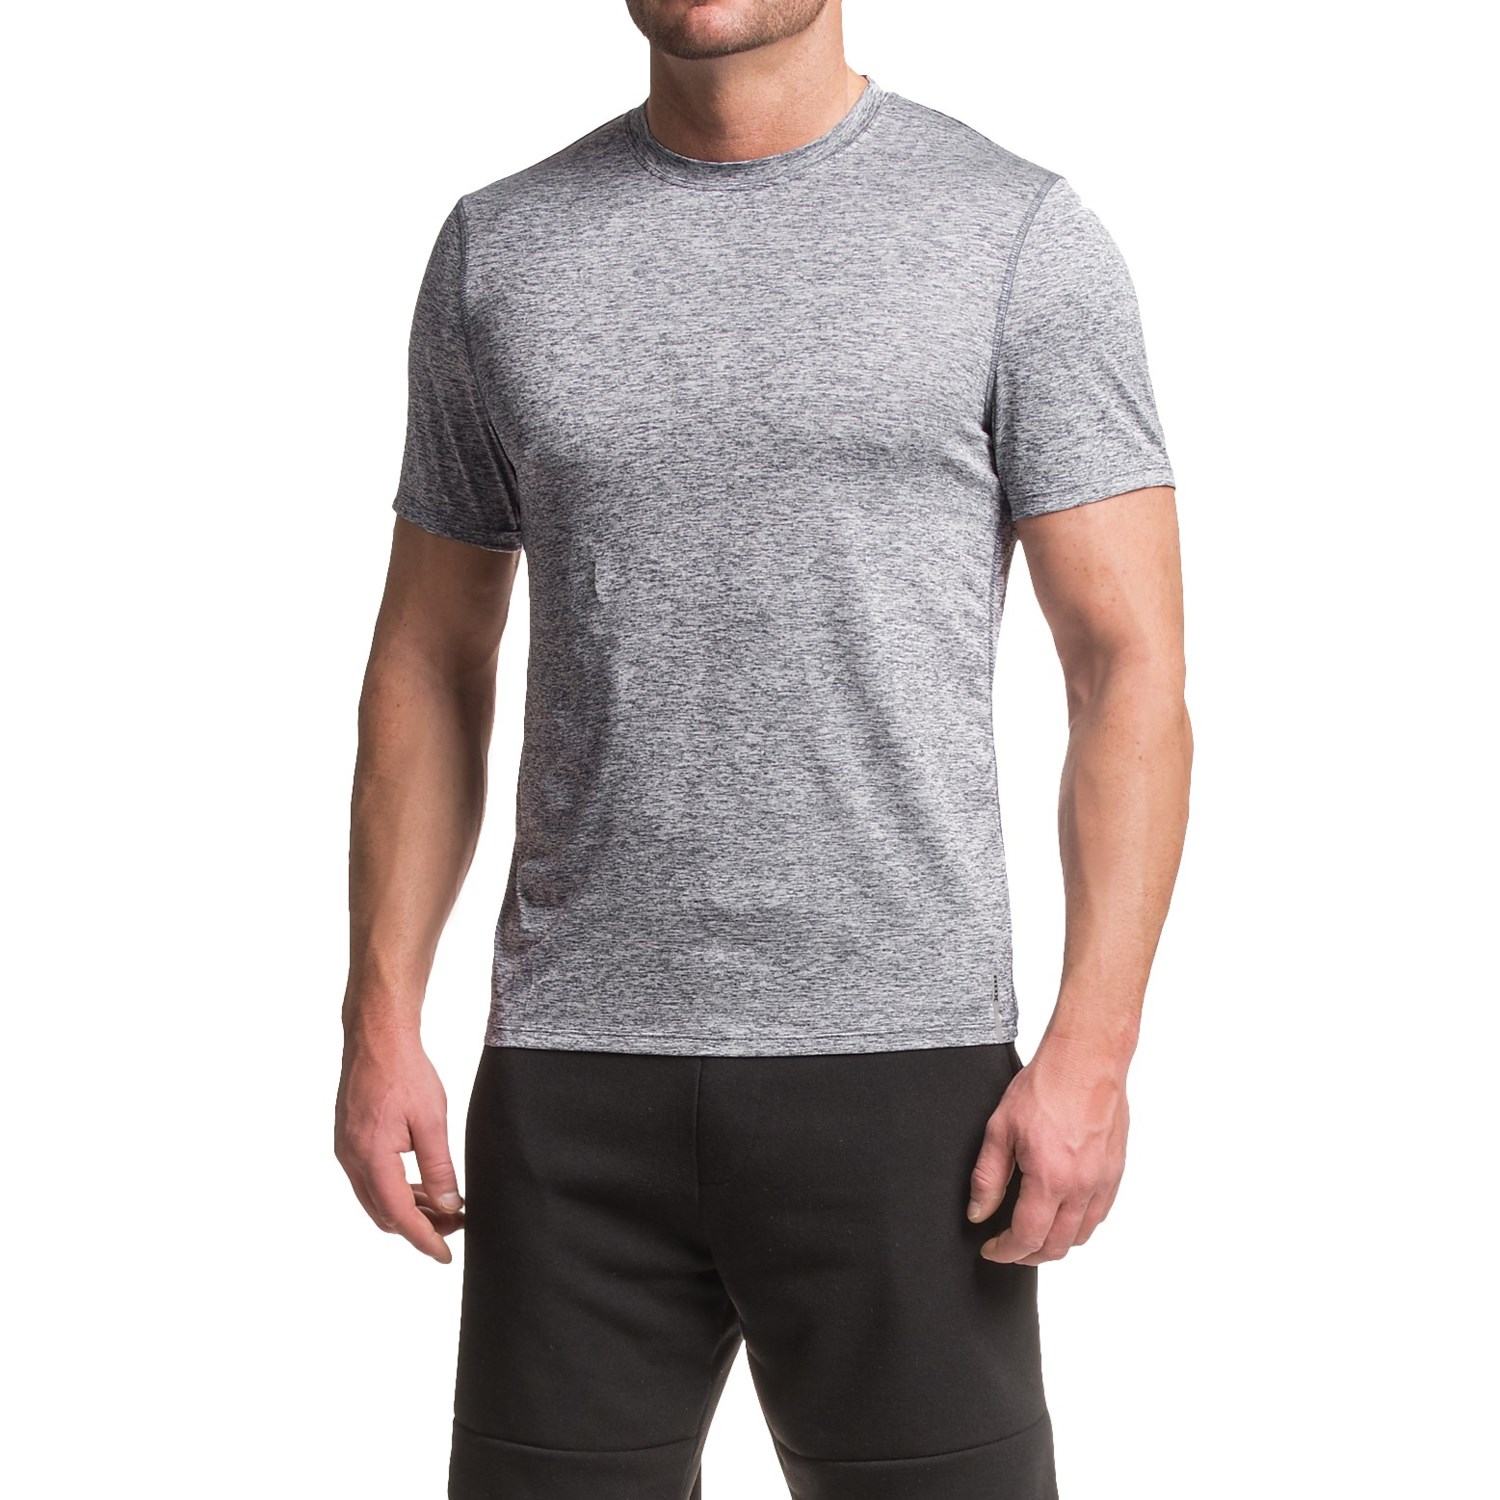 RBX XTrain High Performance Shirt (For Men) - Save 50%